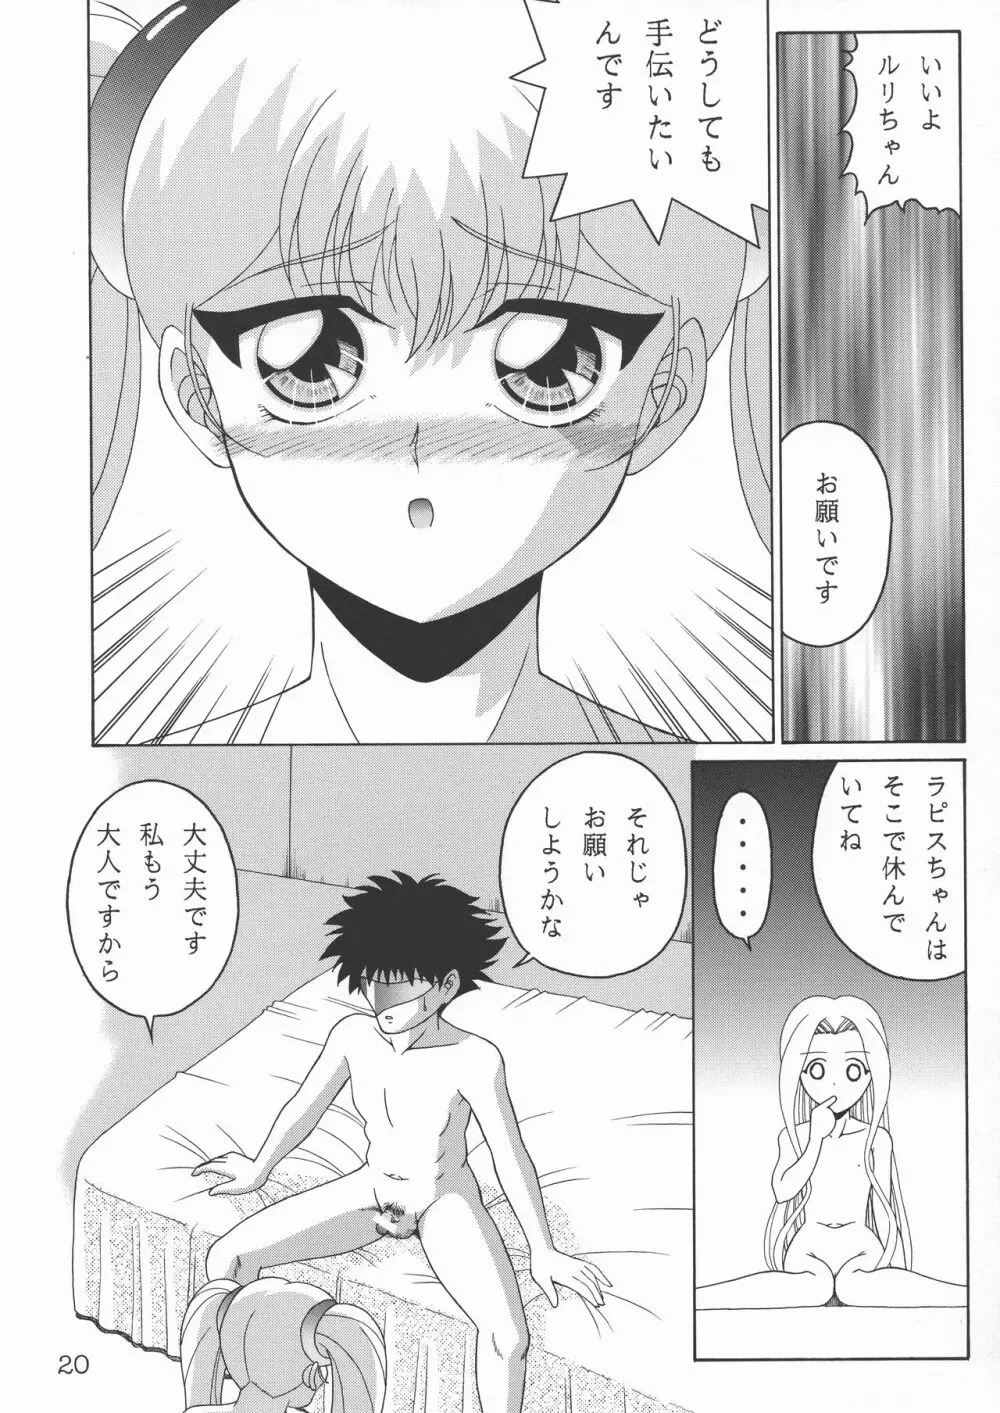 TOKUTEI 9 - page20